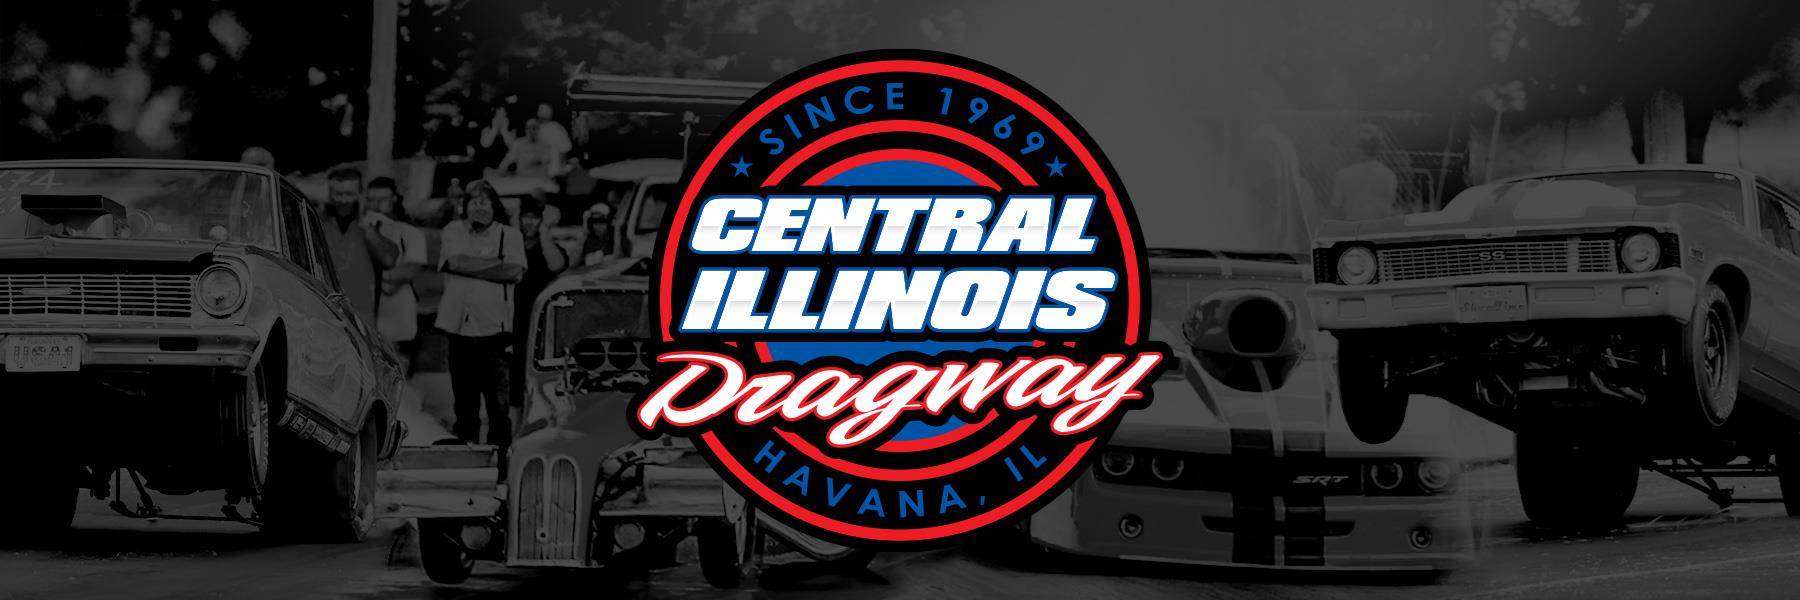 7/2/2023 - Central Illinois Dragway